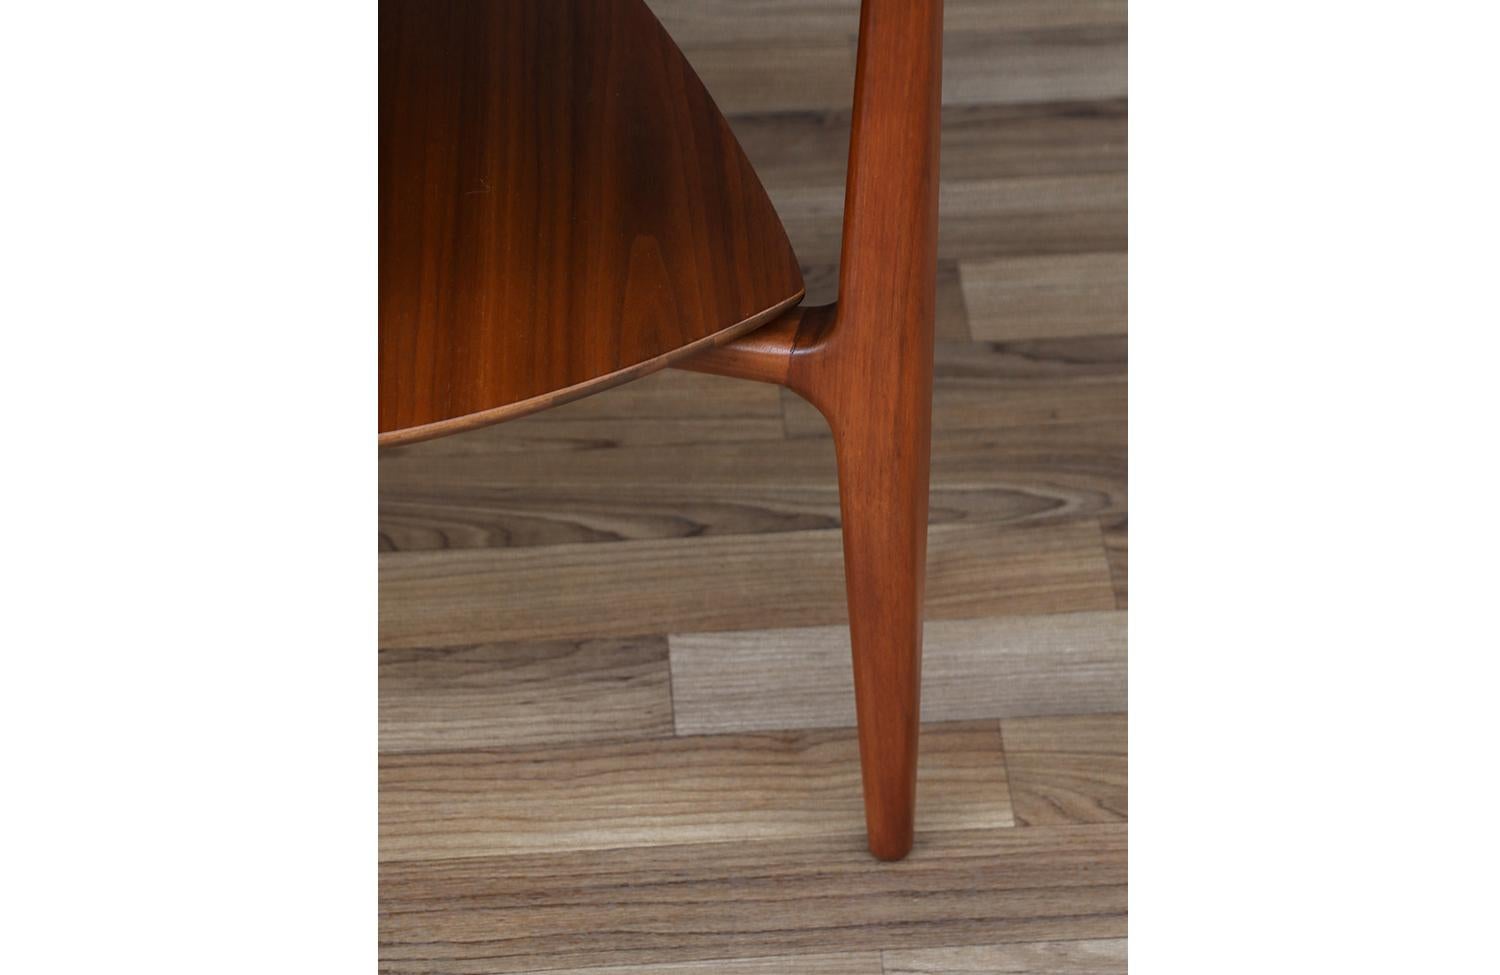 Walnut Mid-Century Modern Two-Tier Tri-Leg Side Table by Henredon For Sale